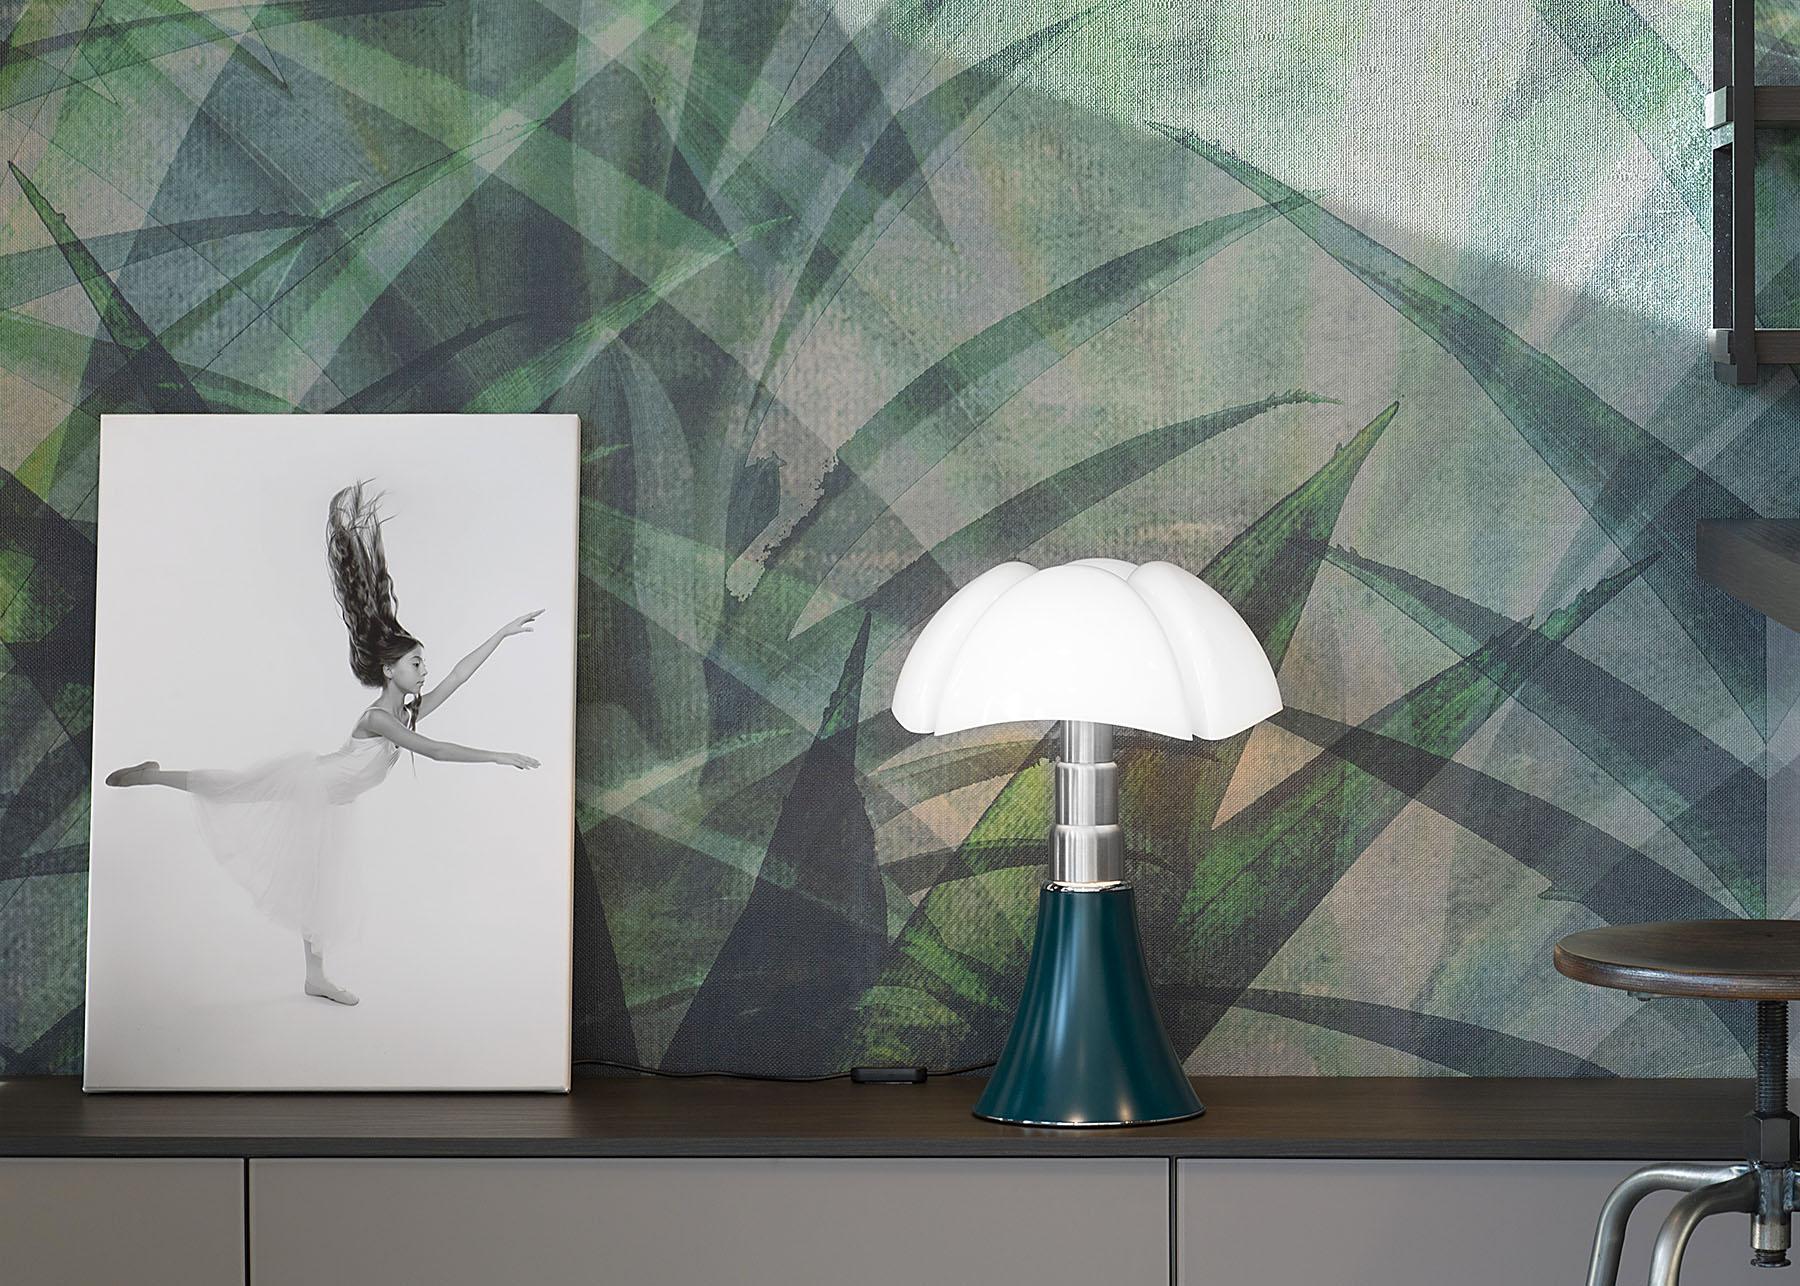 Pipistrello Medium Table Lamp, Dark Brown - Martinelli Luce @ RoyalDesign